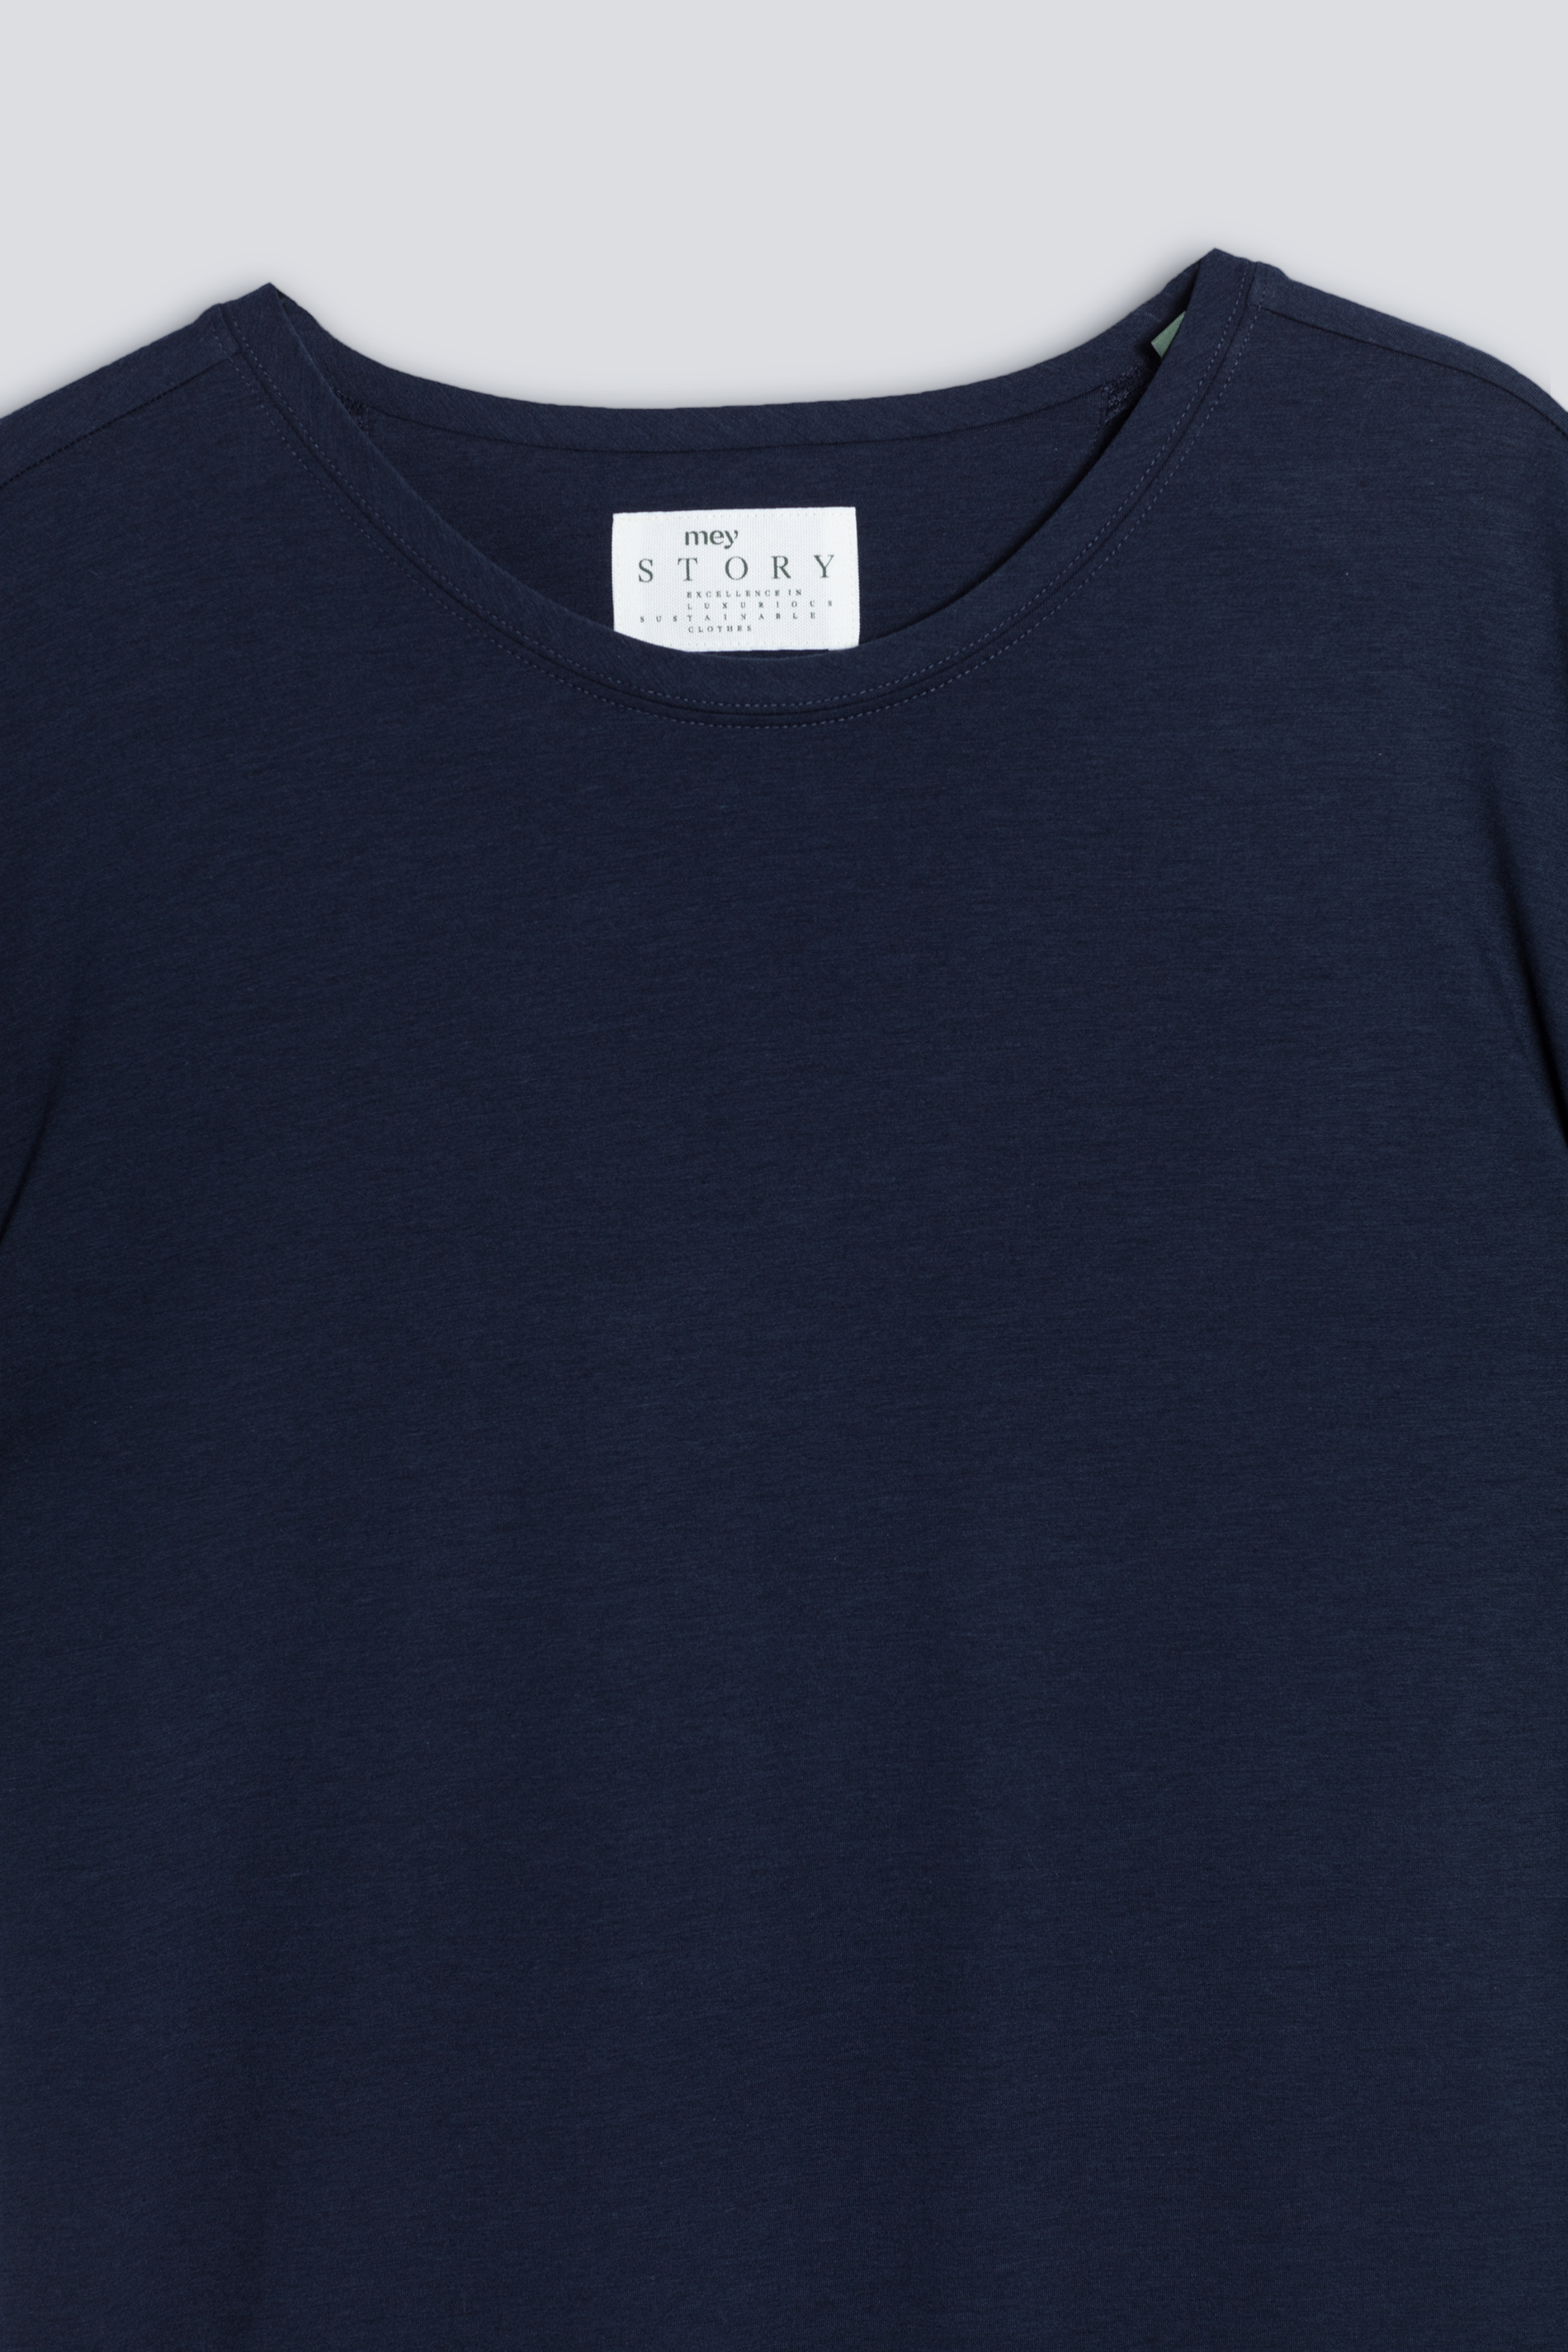 Crew neck shirt Blue Nights Serie Cotone Stretch Detail View 01 | mey®